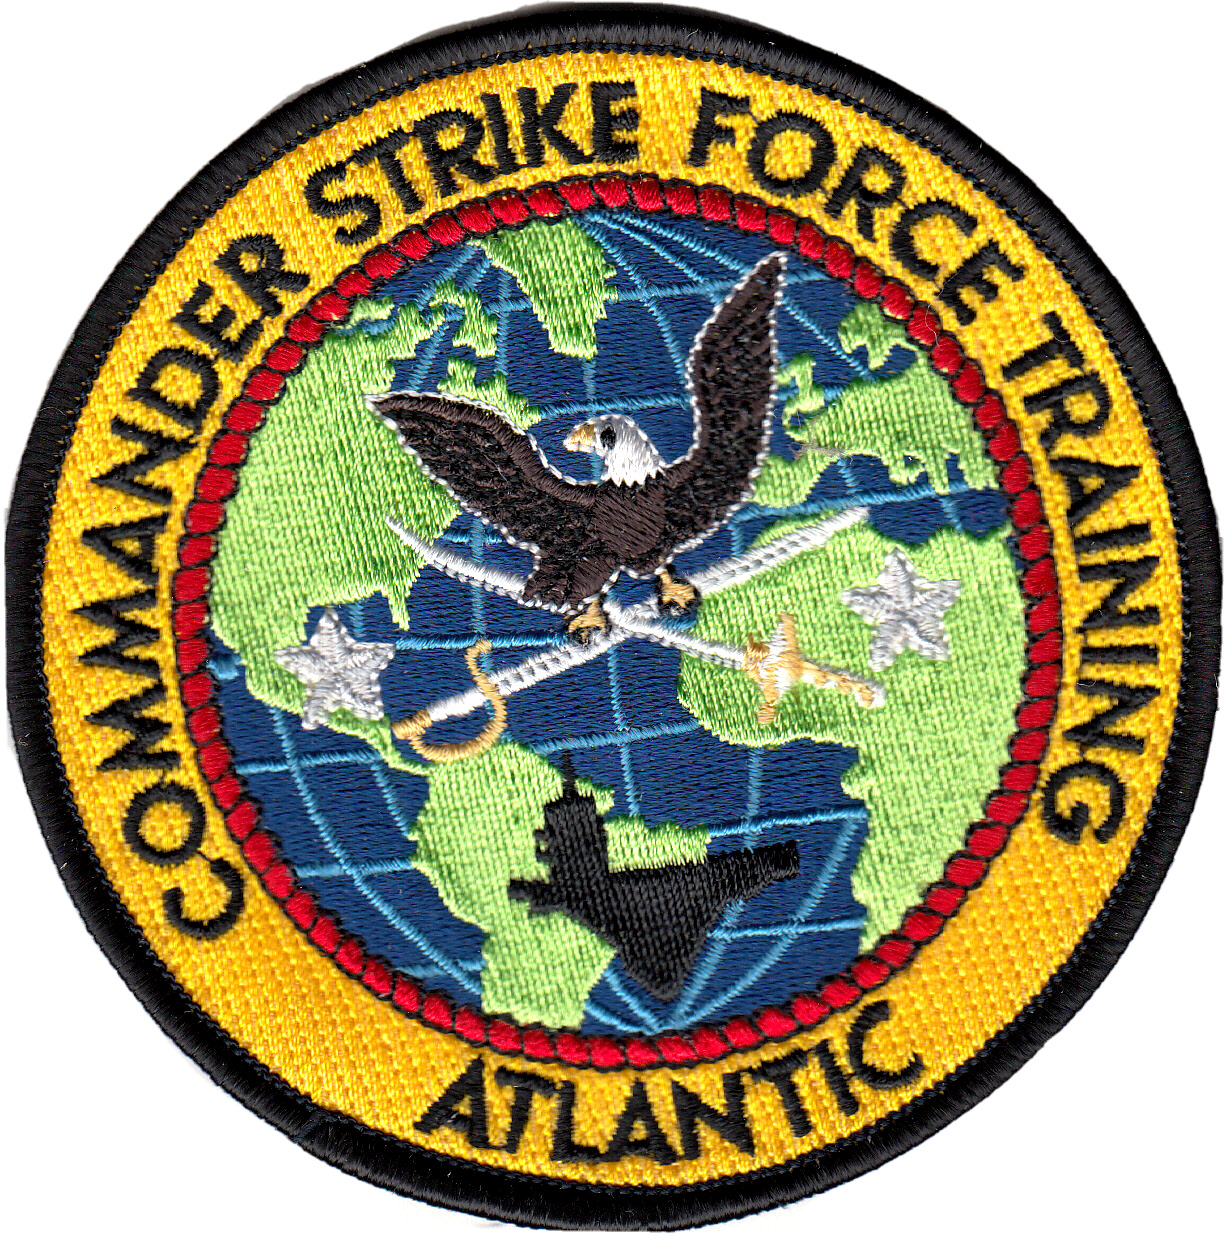 COMMANDER STRIKE FORCE TRAINING ATLANTIC CHEST PATCH 